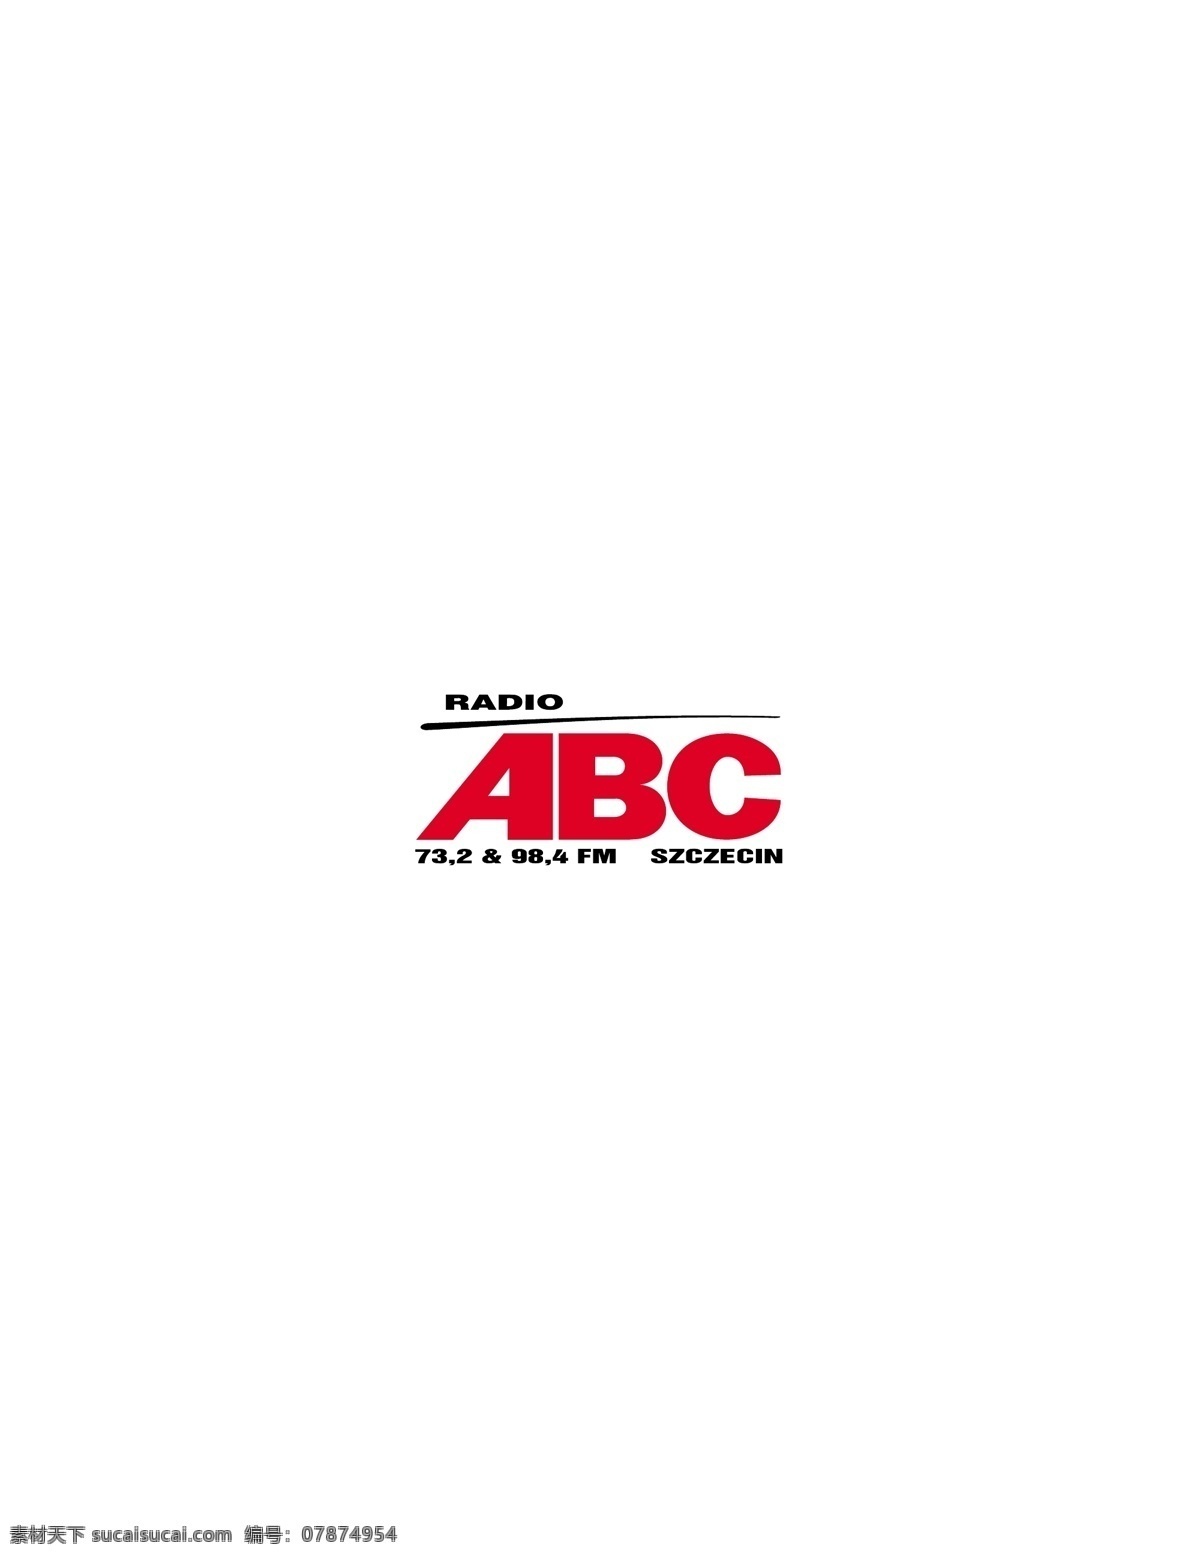 abc radio logo 设计欣赏 标志设计 欣赏 矢量下载 网页矢量 商业矢量 logo大全 红色